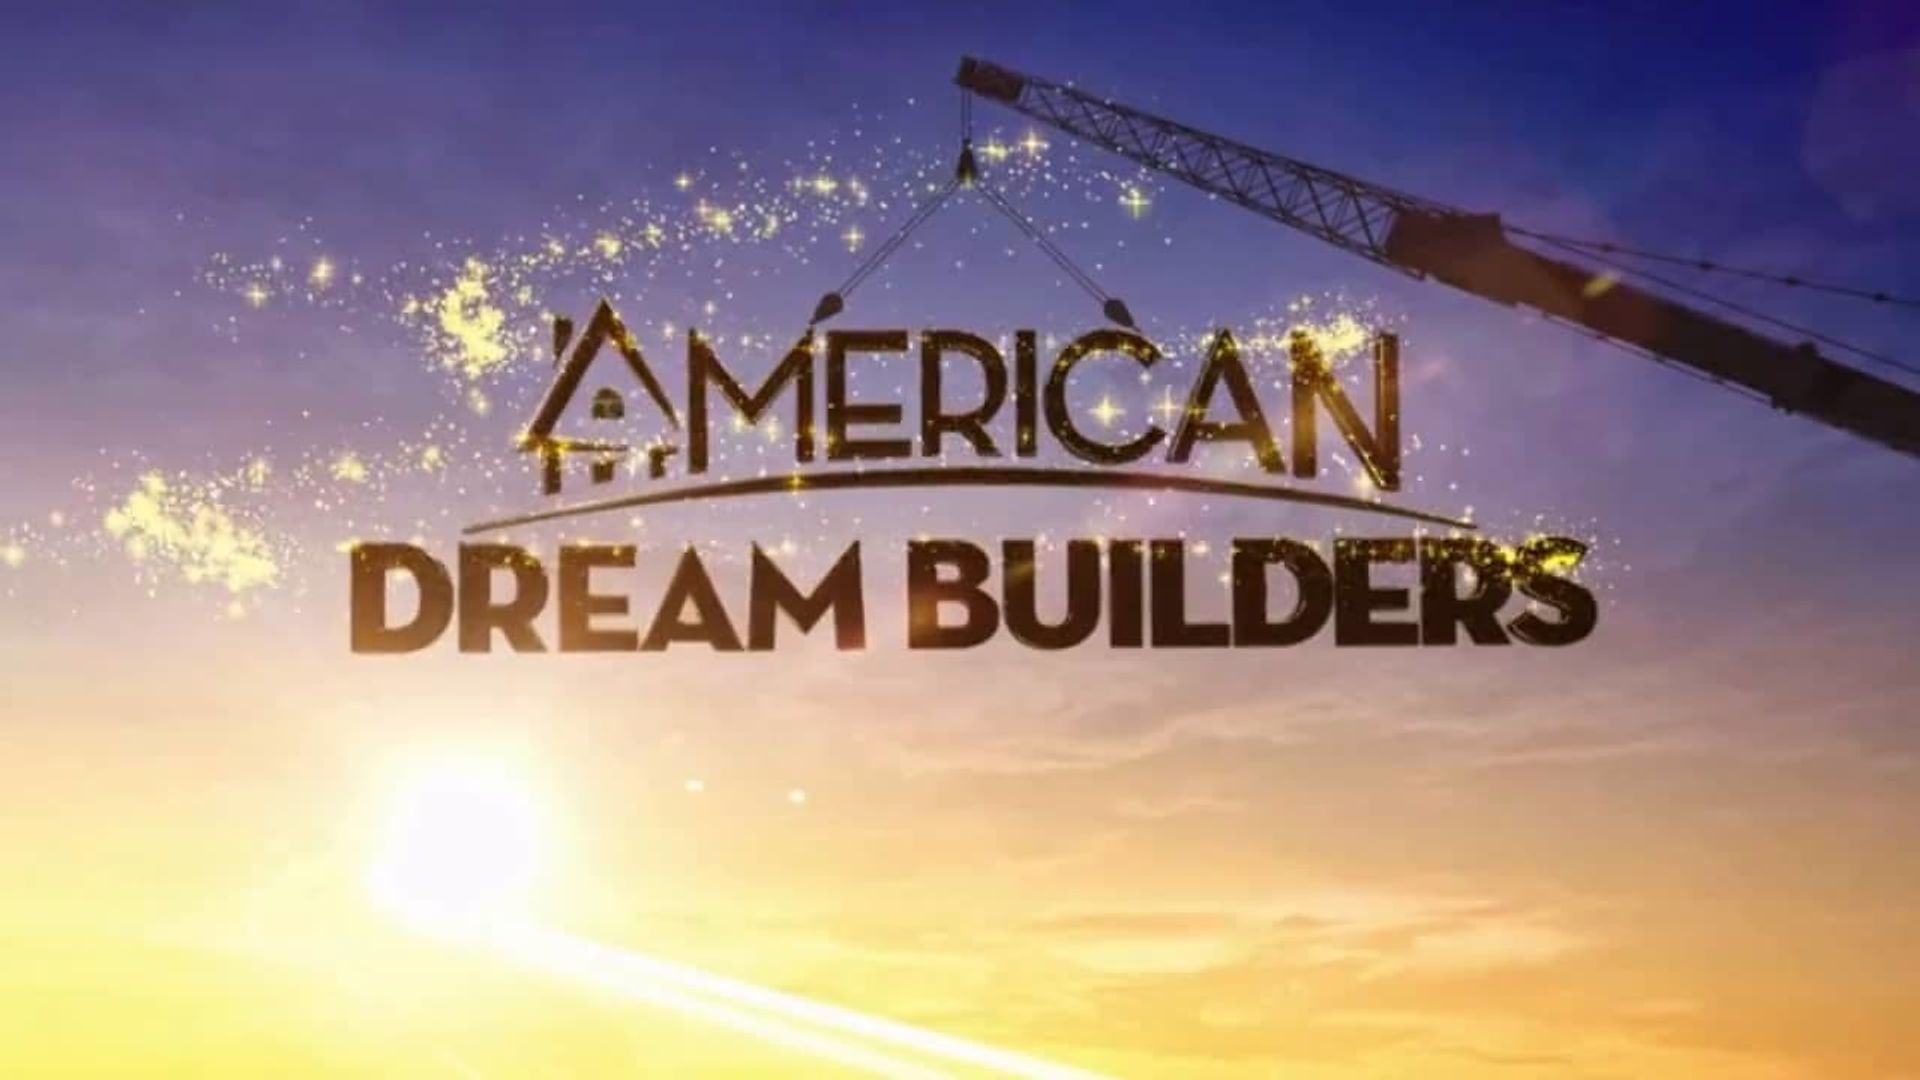 American Dream Builders background